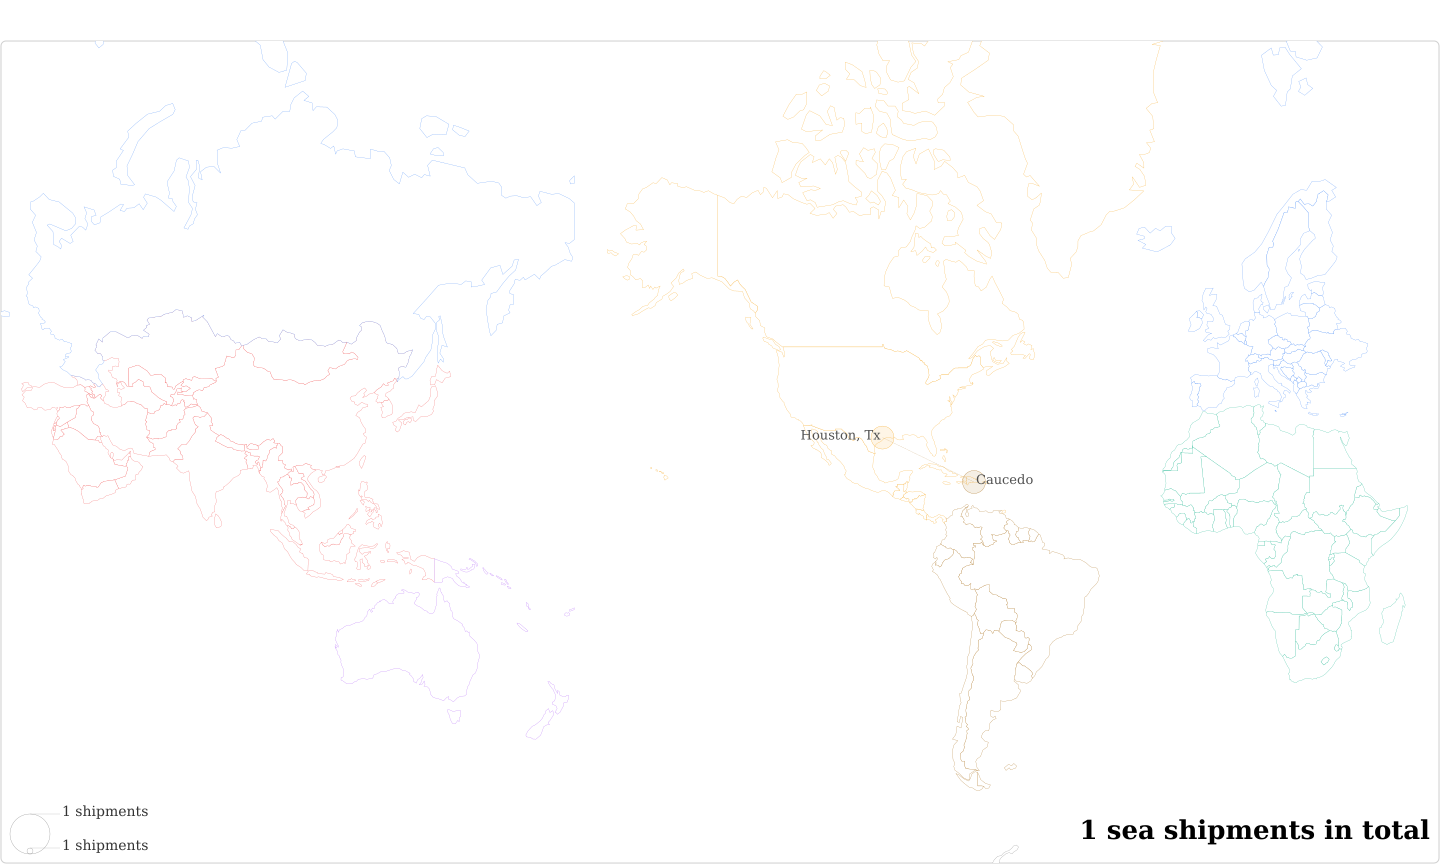 Renovanz De's Imports Per Country Map